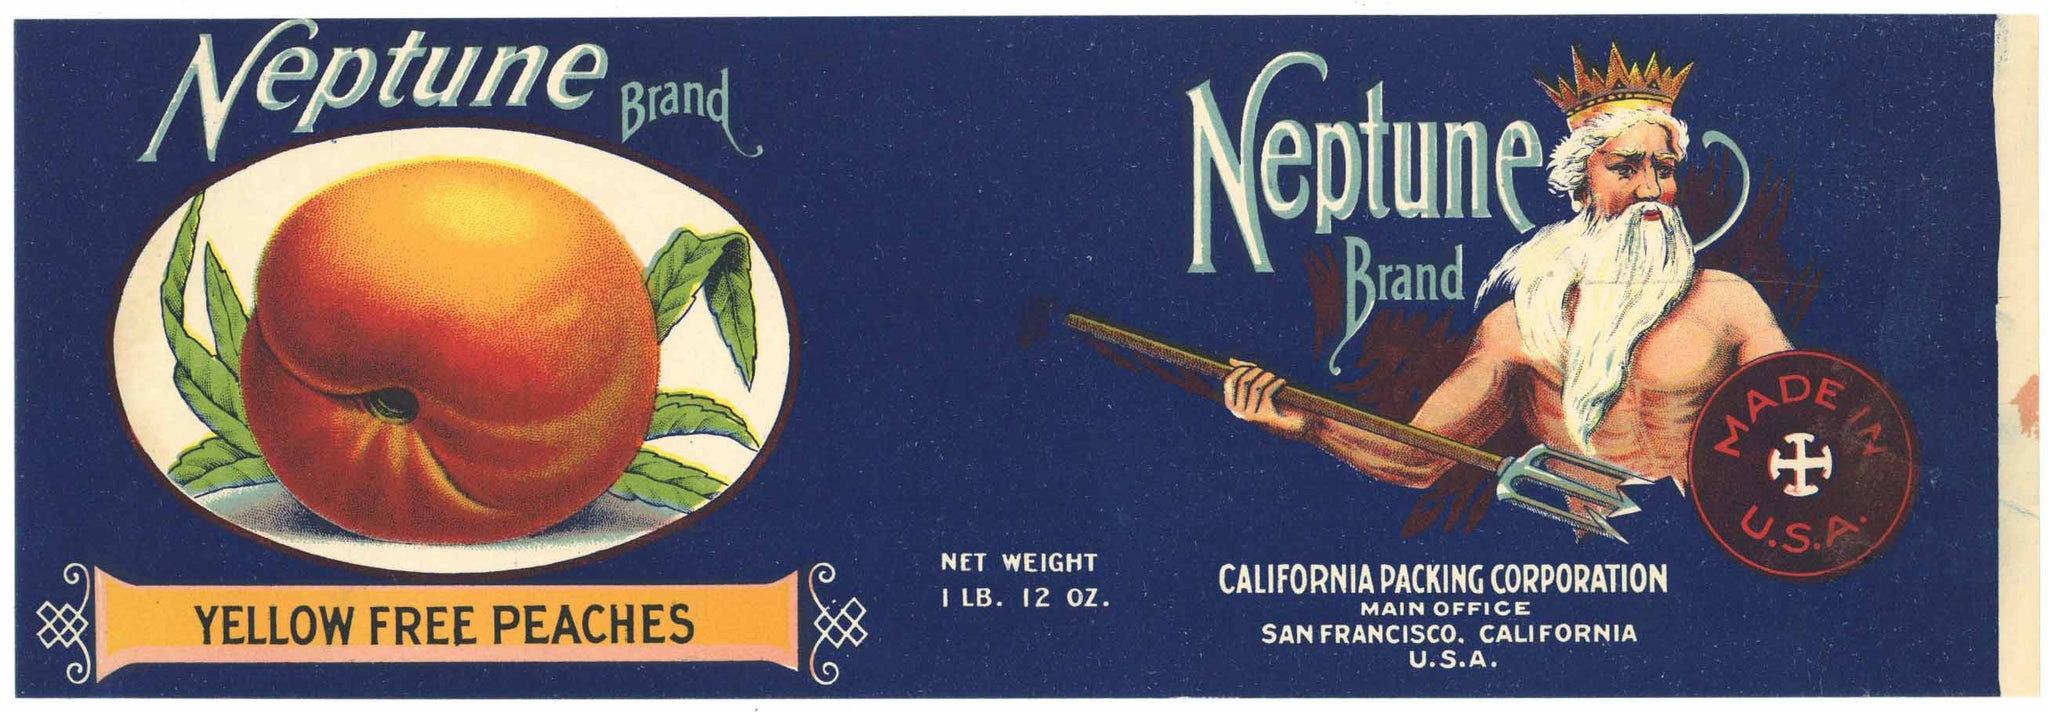 Neptune Brand Vintage Peach Can Label